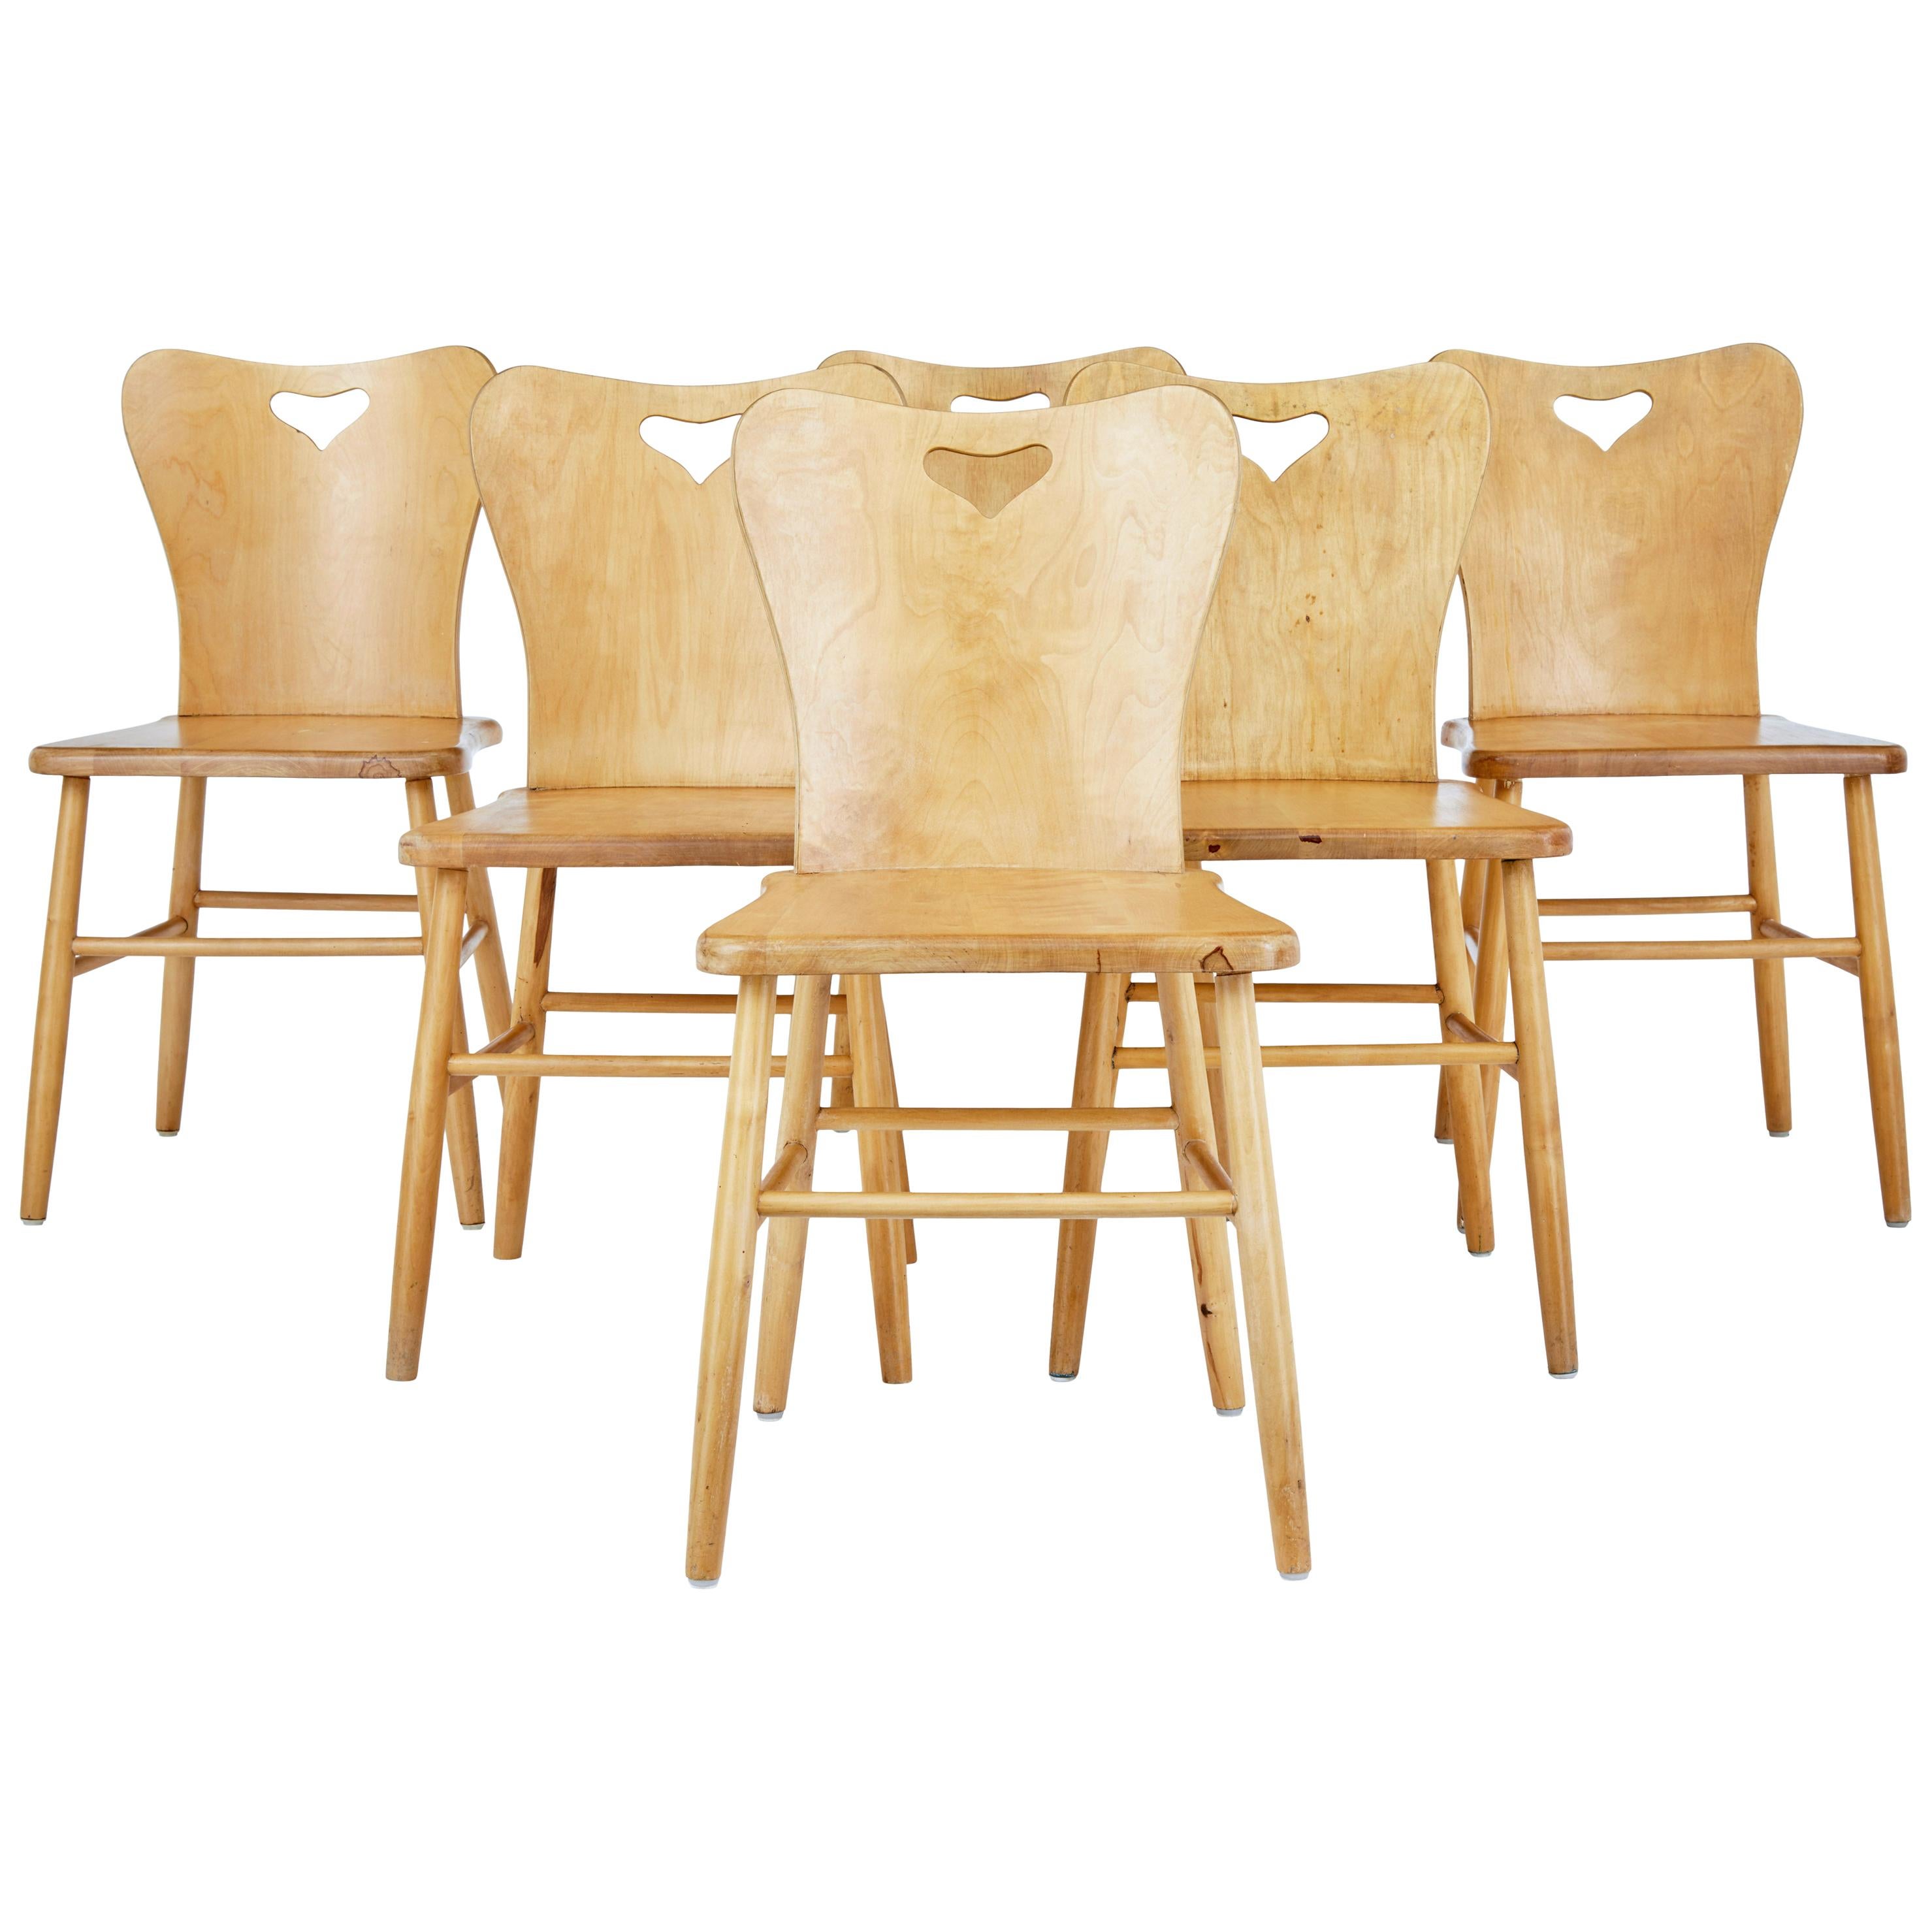 Set of 6 Mid-20th Century Scandinavian Pine Dining Chairs